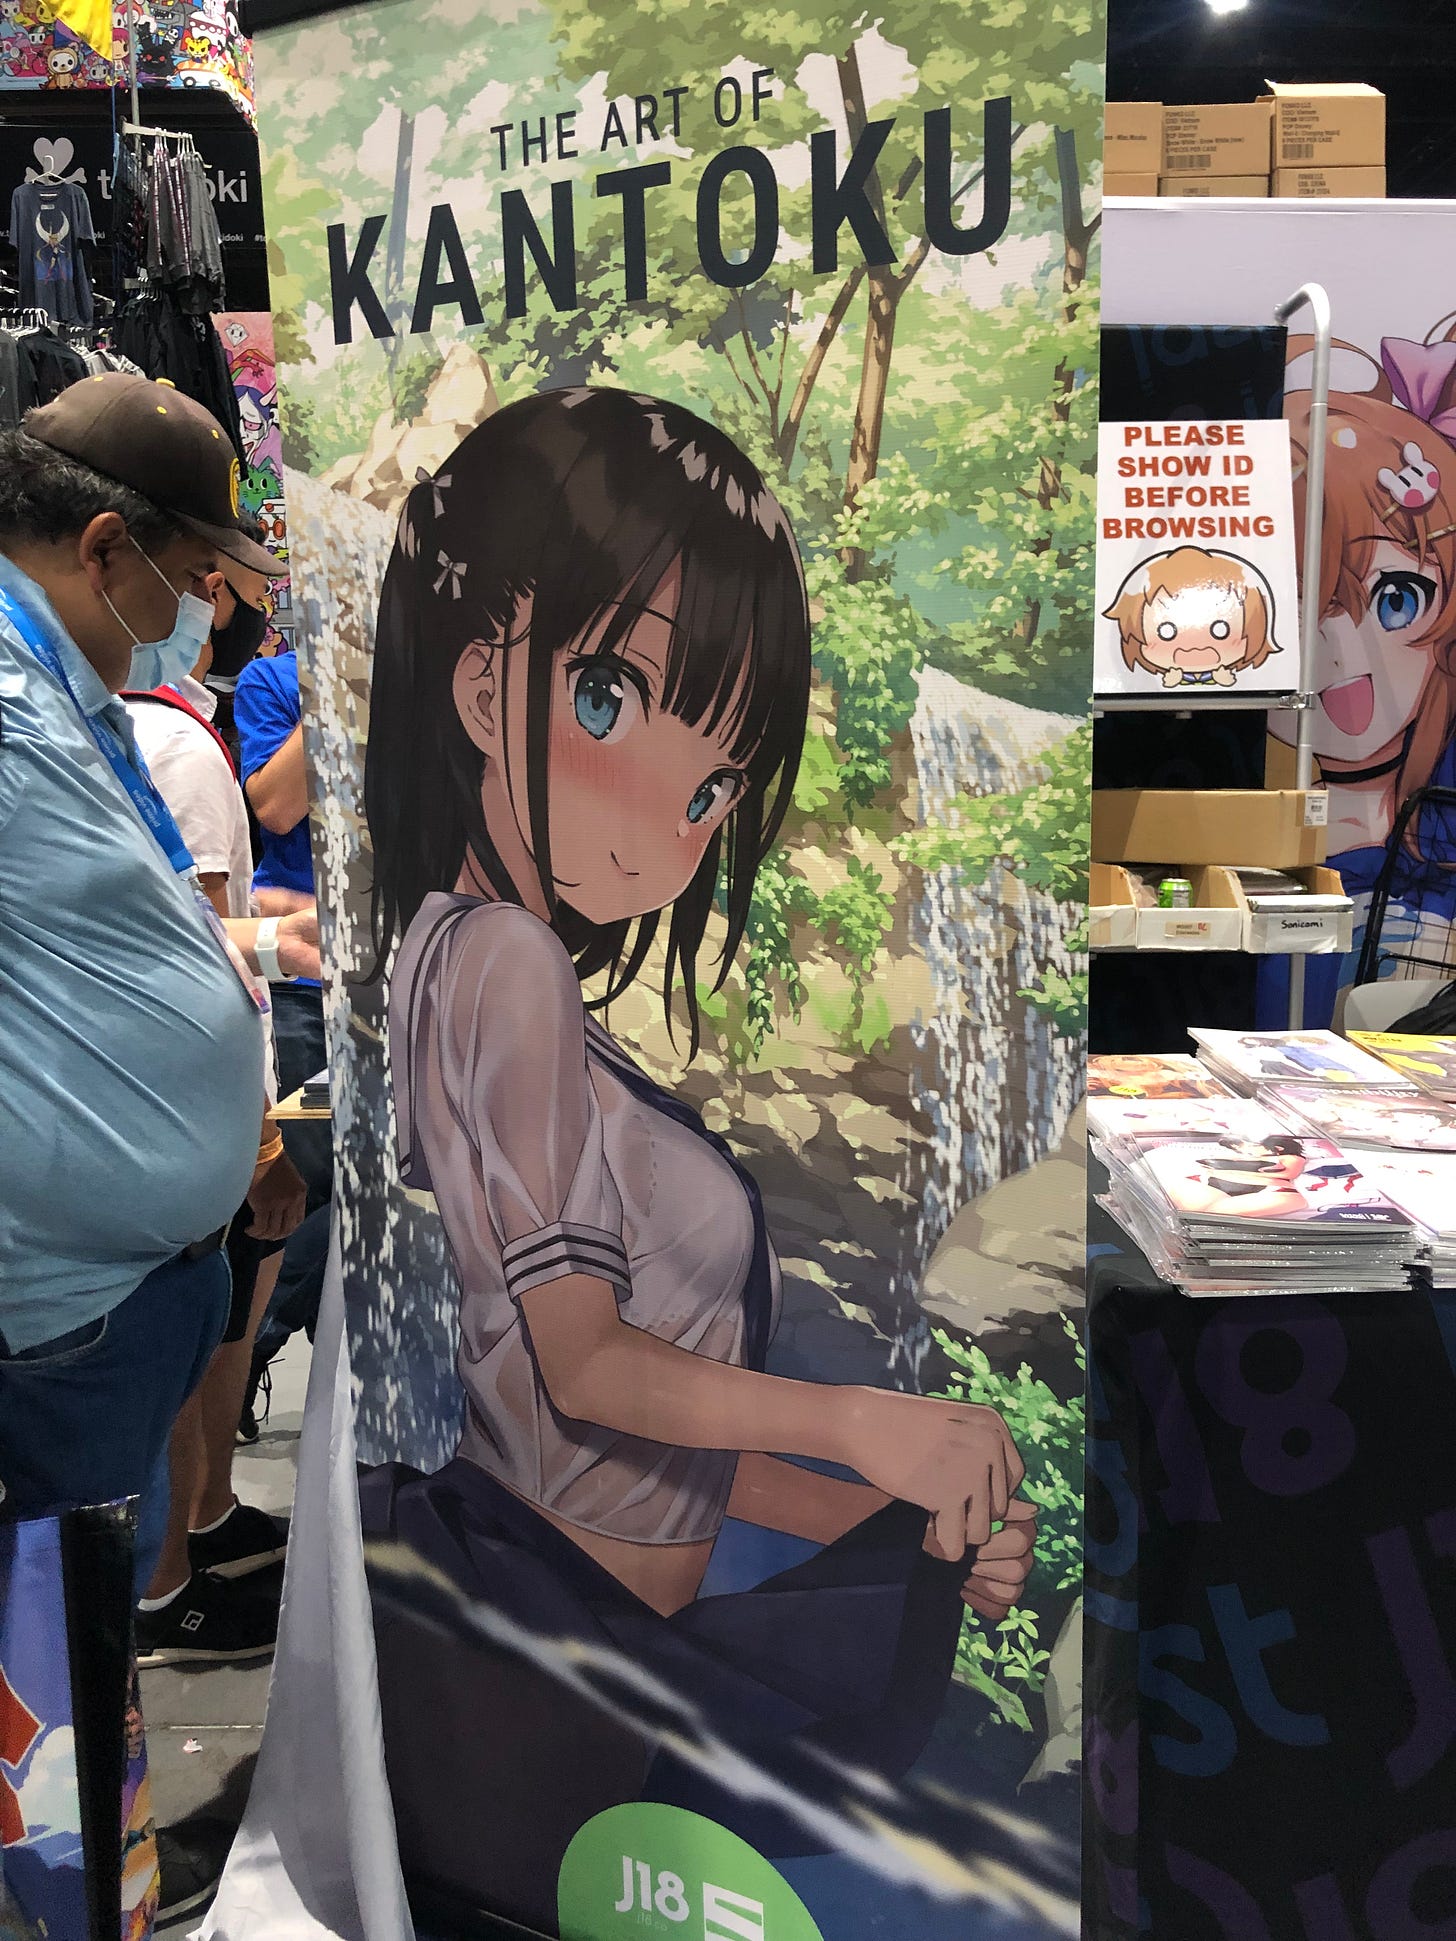 The Art of Kantoku banner.